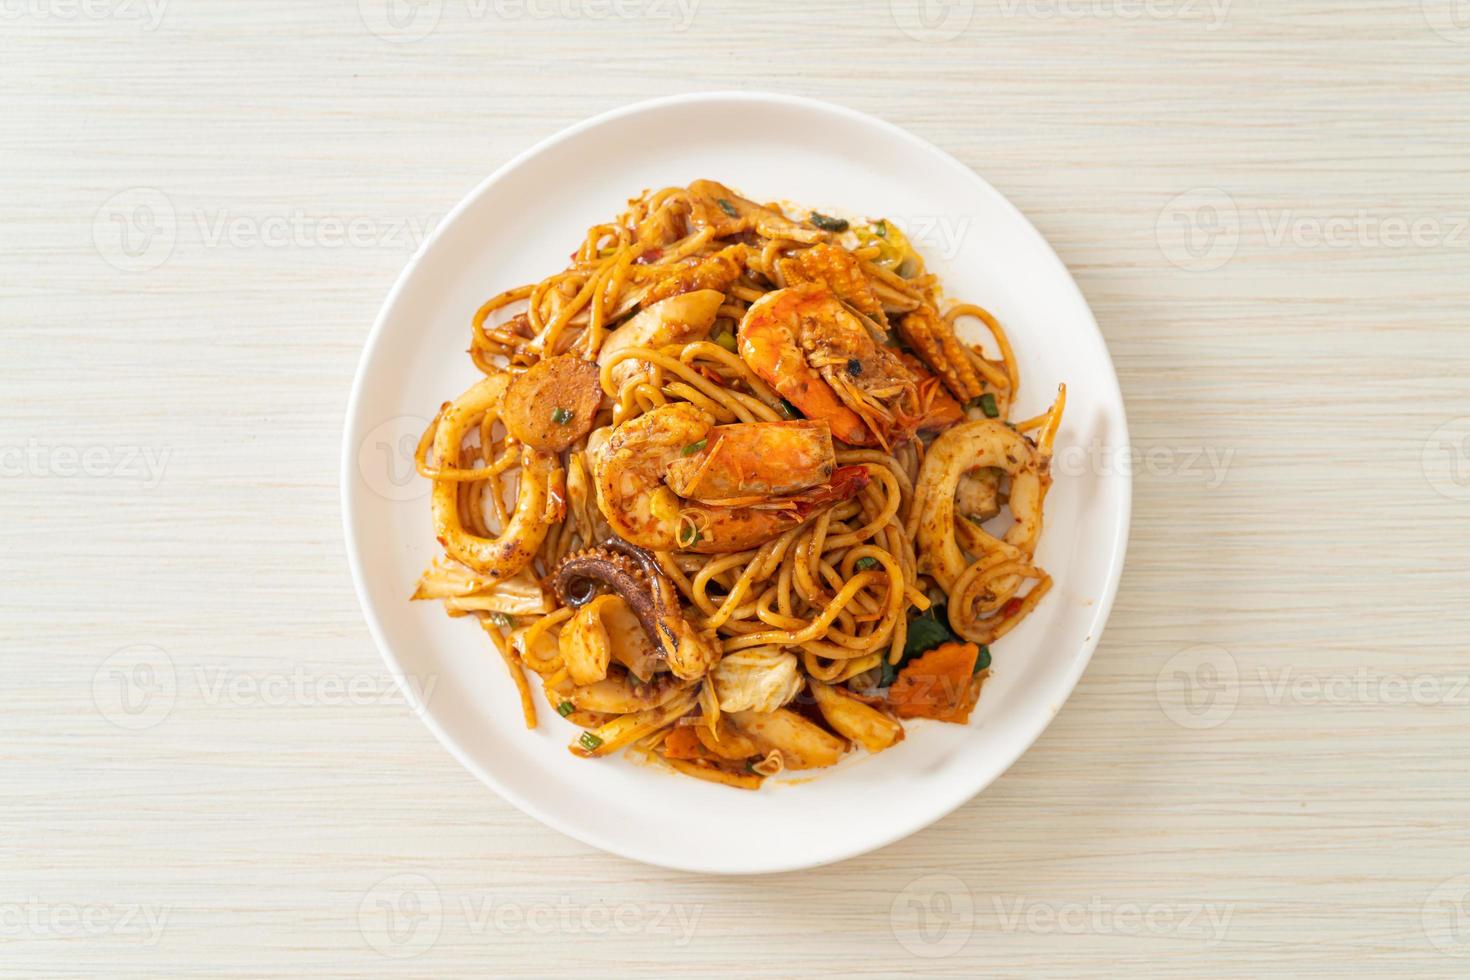 stekt tom yum skaldjur torkad spaghetti - fusionsmatstil foto